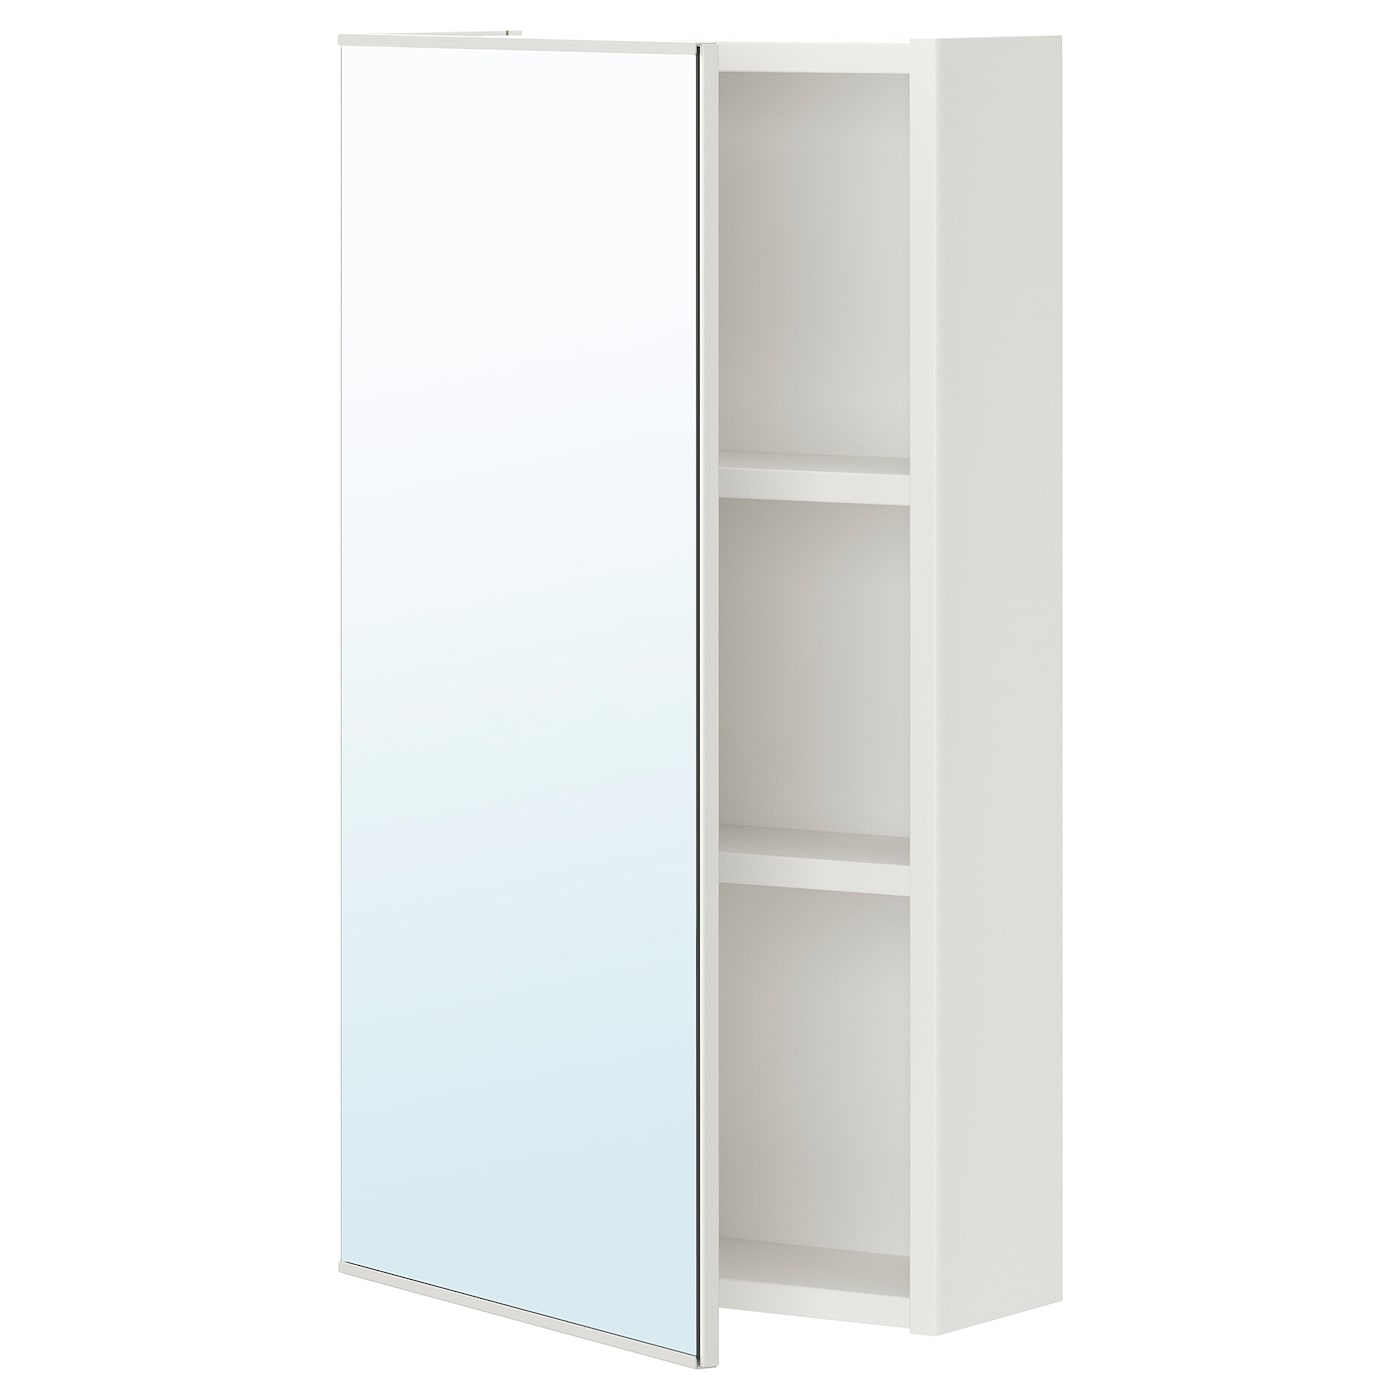 Настенный шкаф для ванной комнаты - ENHET IKEA/ ЭНХЕТ ИКЕА, 40x15x75 см, белый